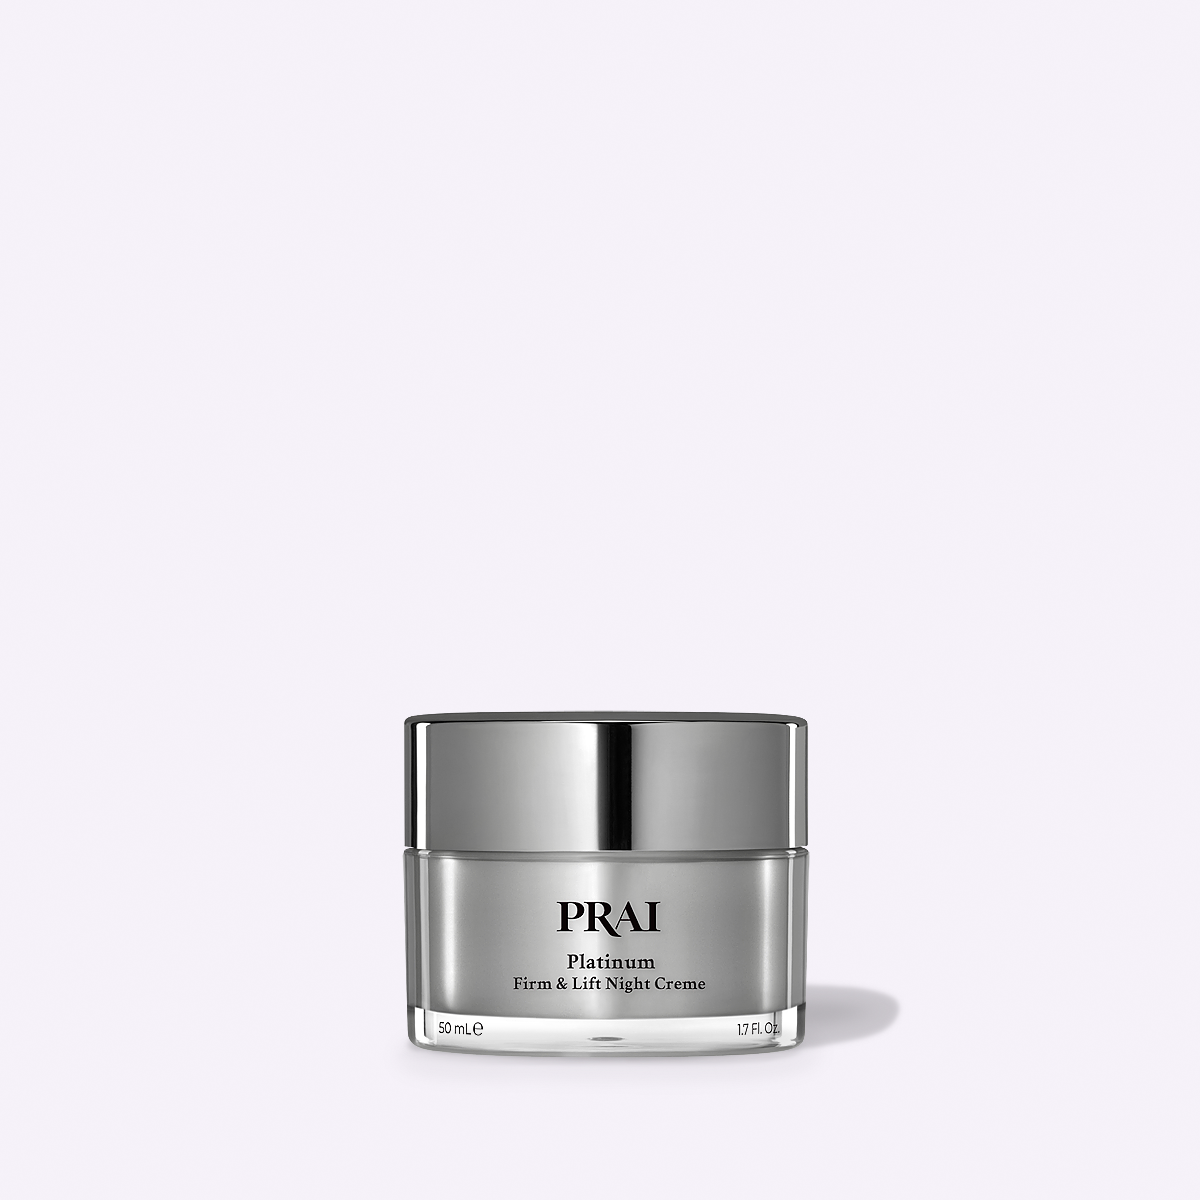 PRAI Beauty Platinum Firm & Lift Night Creme Overnight Repair